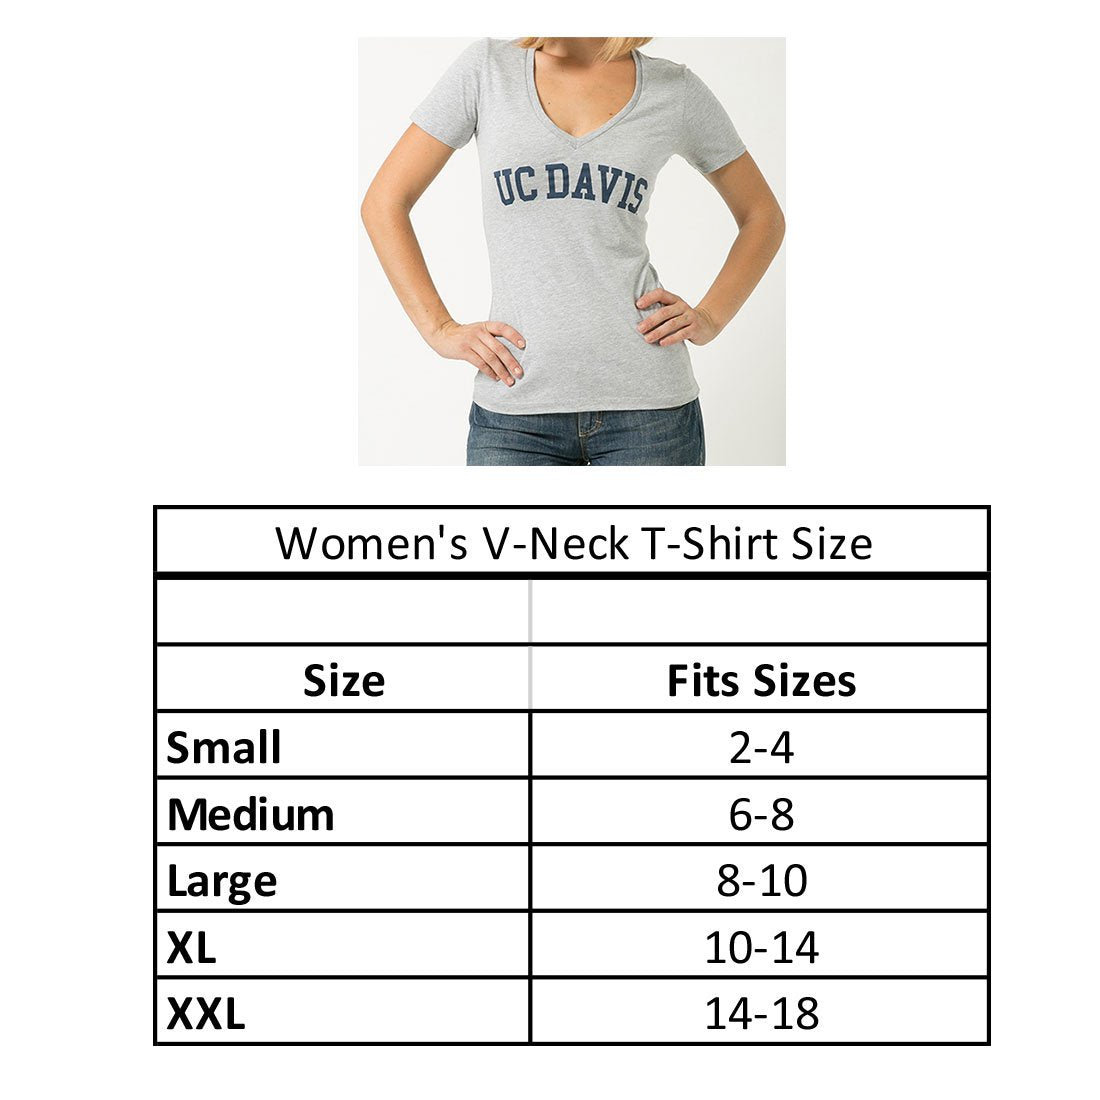 Womens T-Shirts & Tops Size Chart